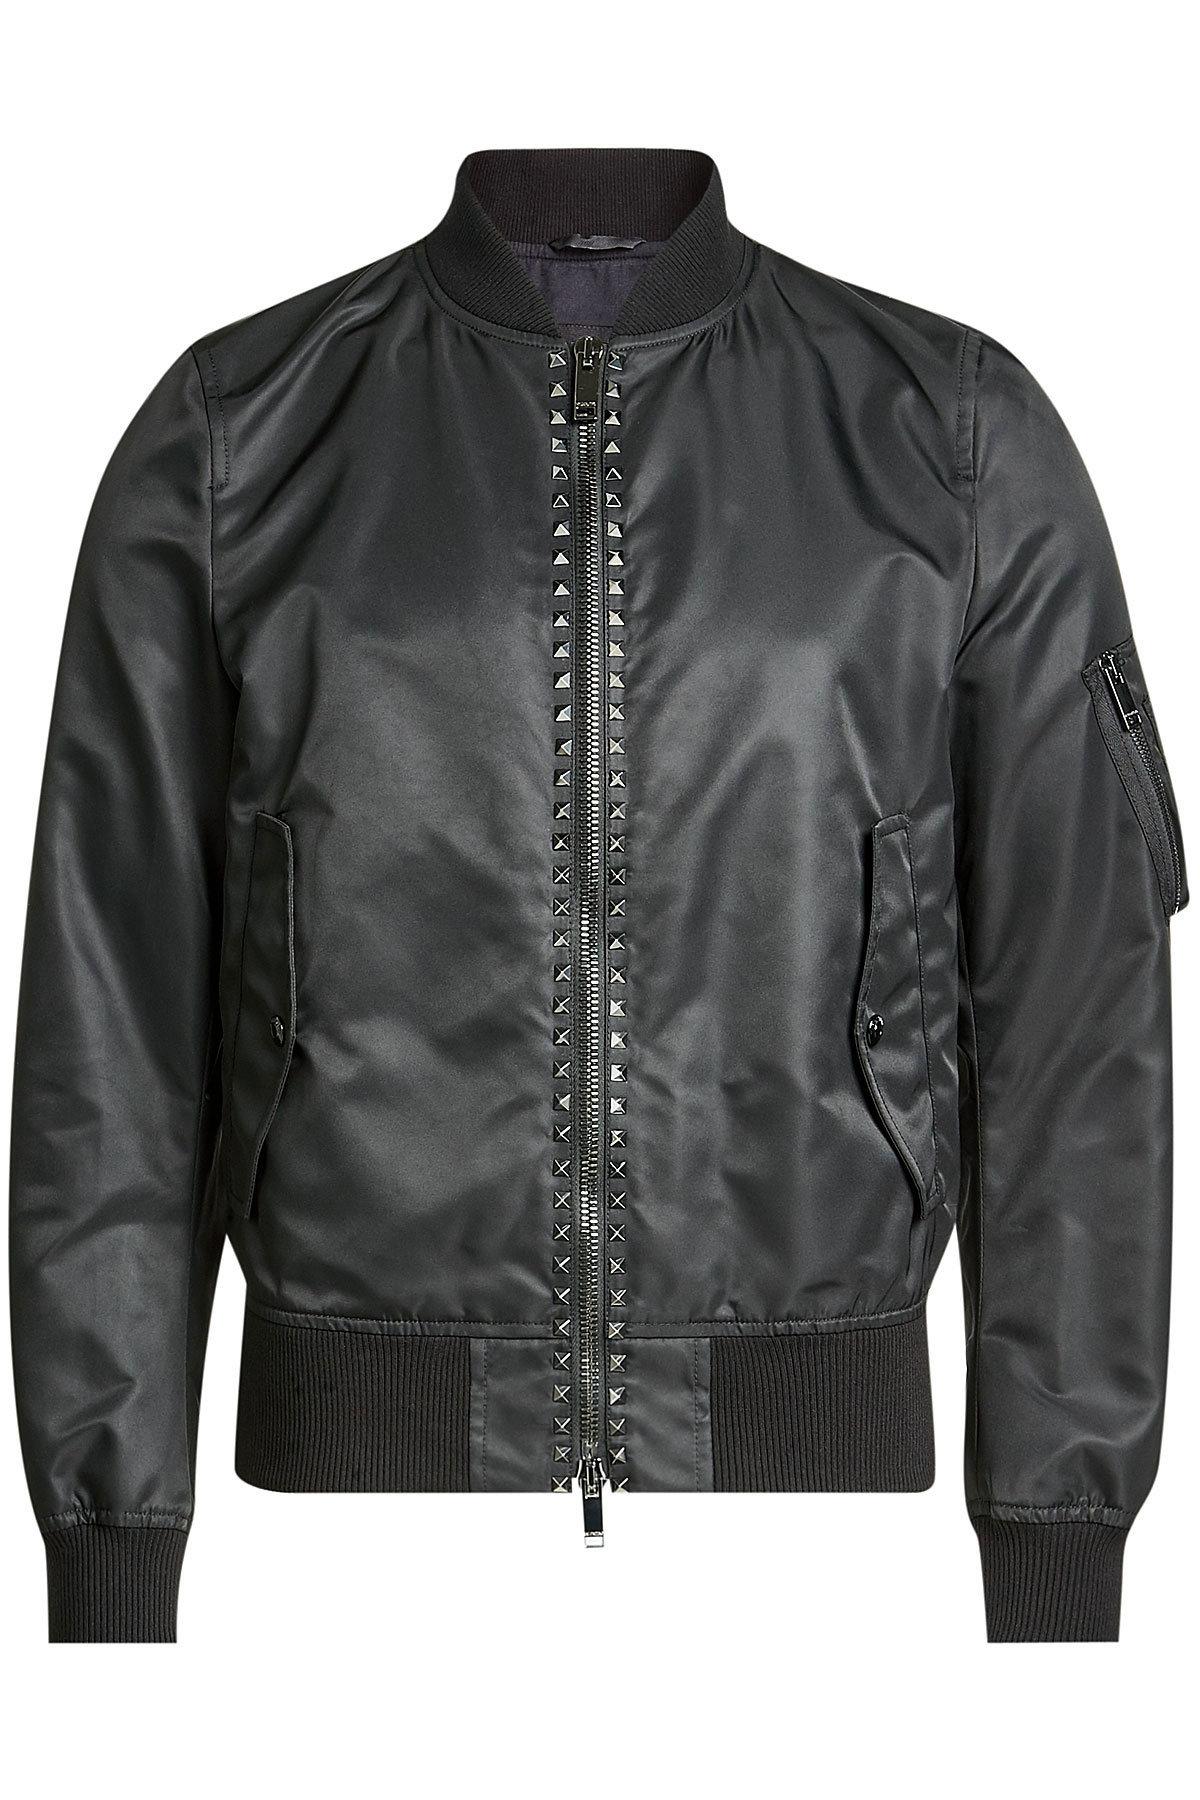 Lyst - Valentino Studded Bomber Jacket in Black for Men